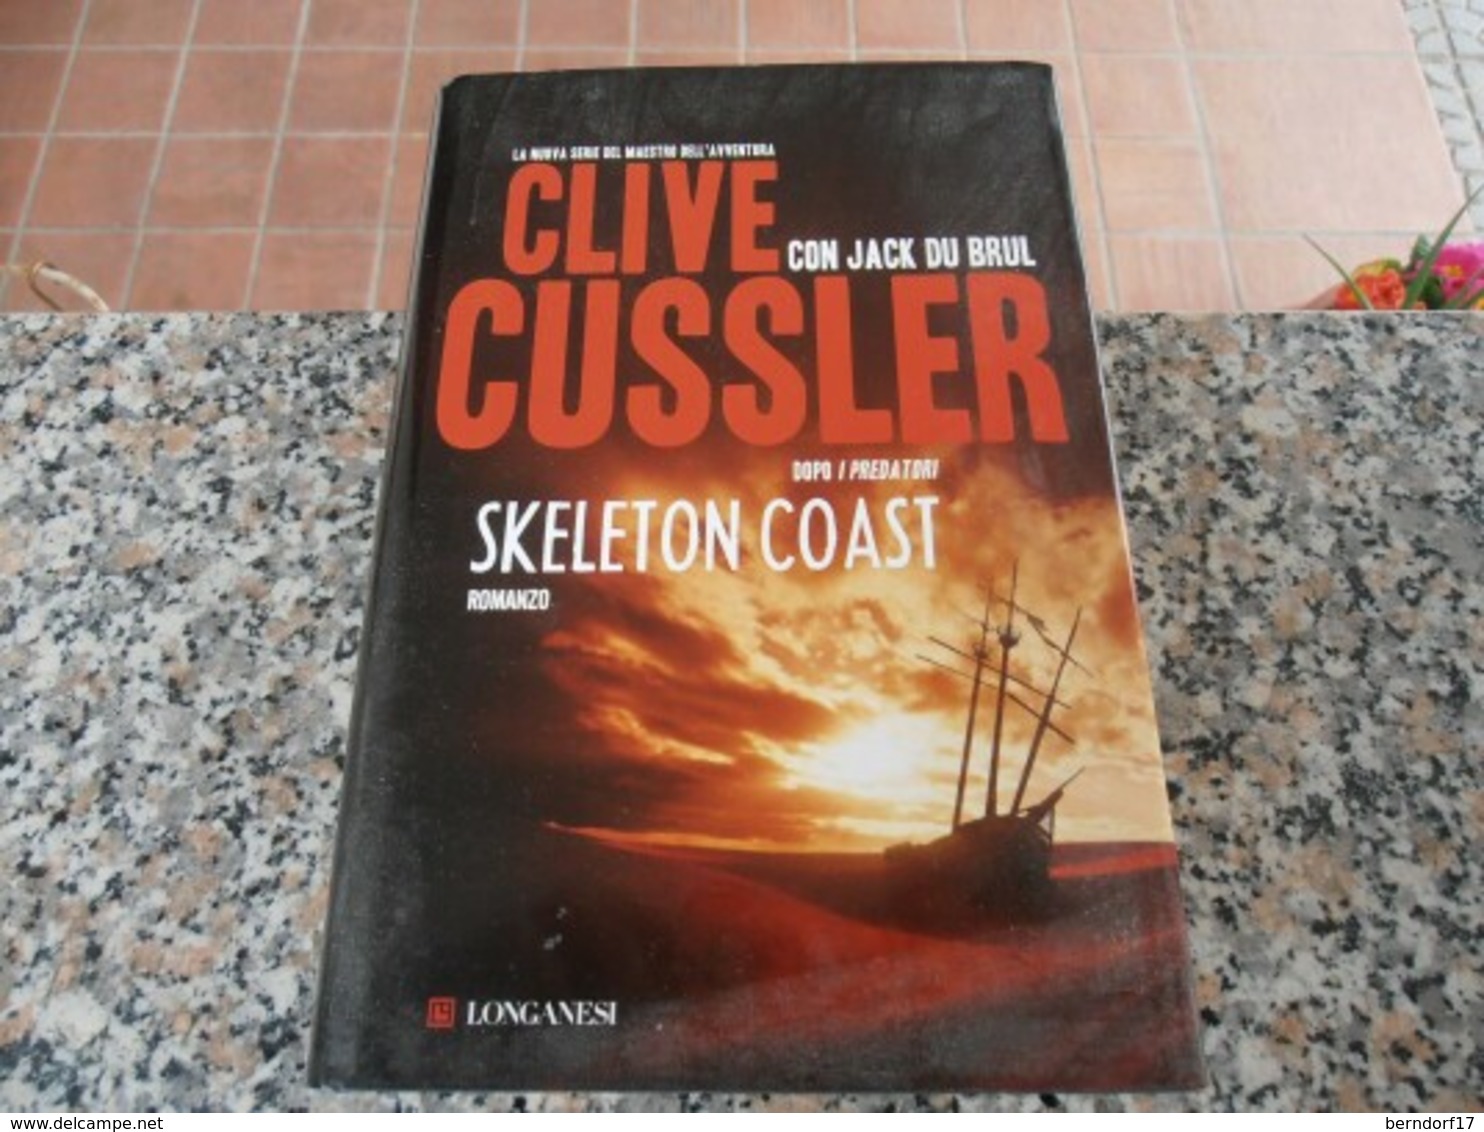 Skeleton Coast - Clive Cussler - Action & Adventure